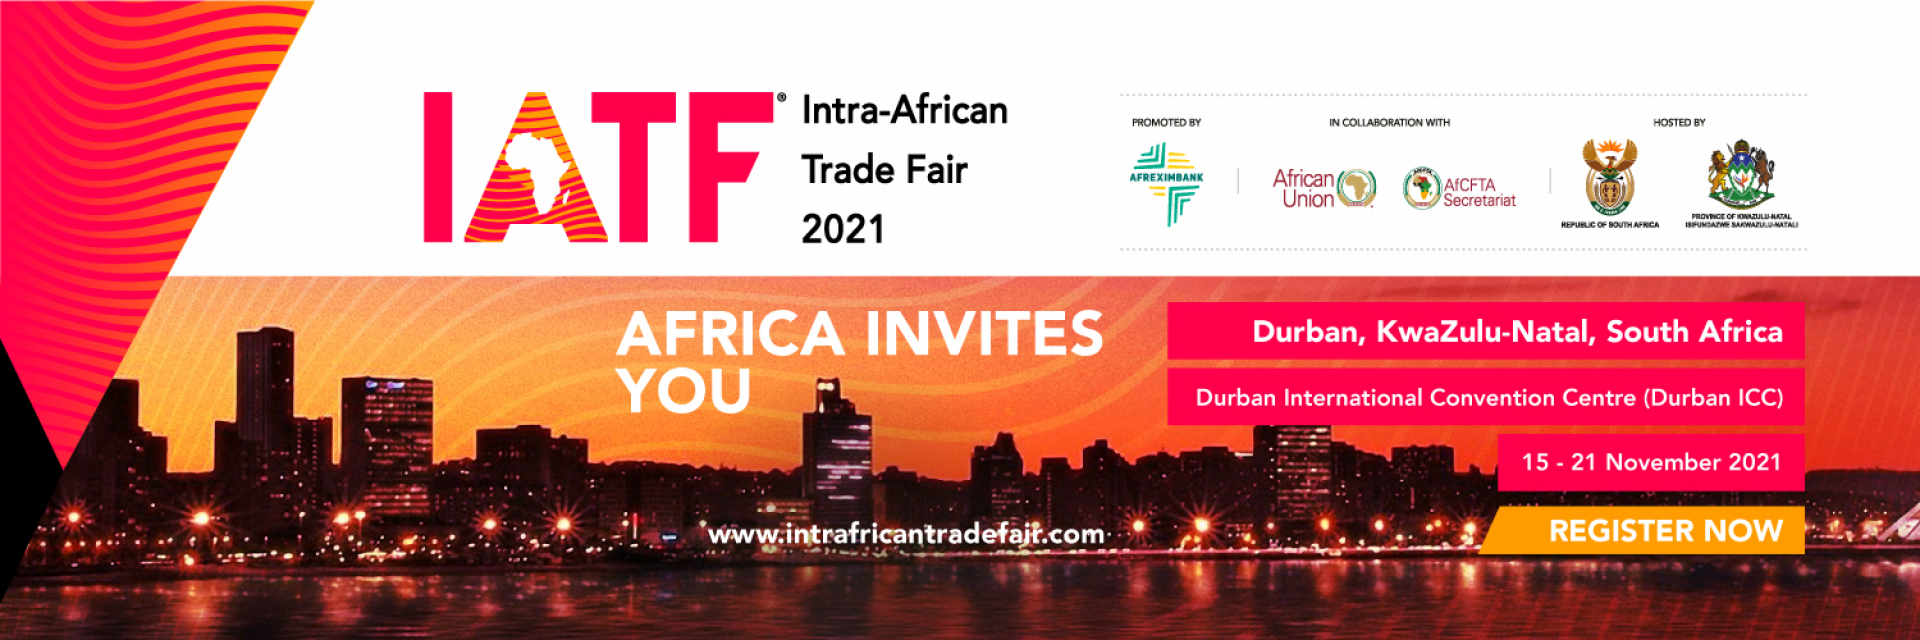 Intra-African Trade Fair 2021